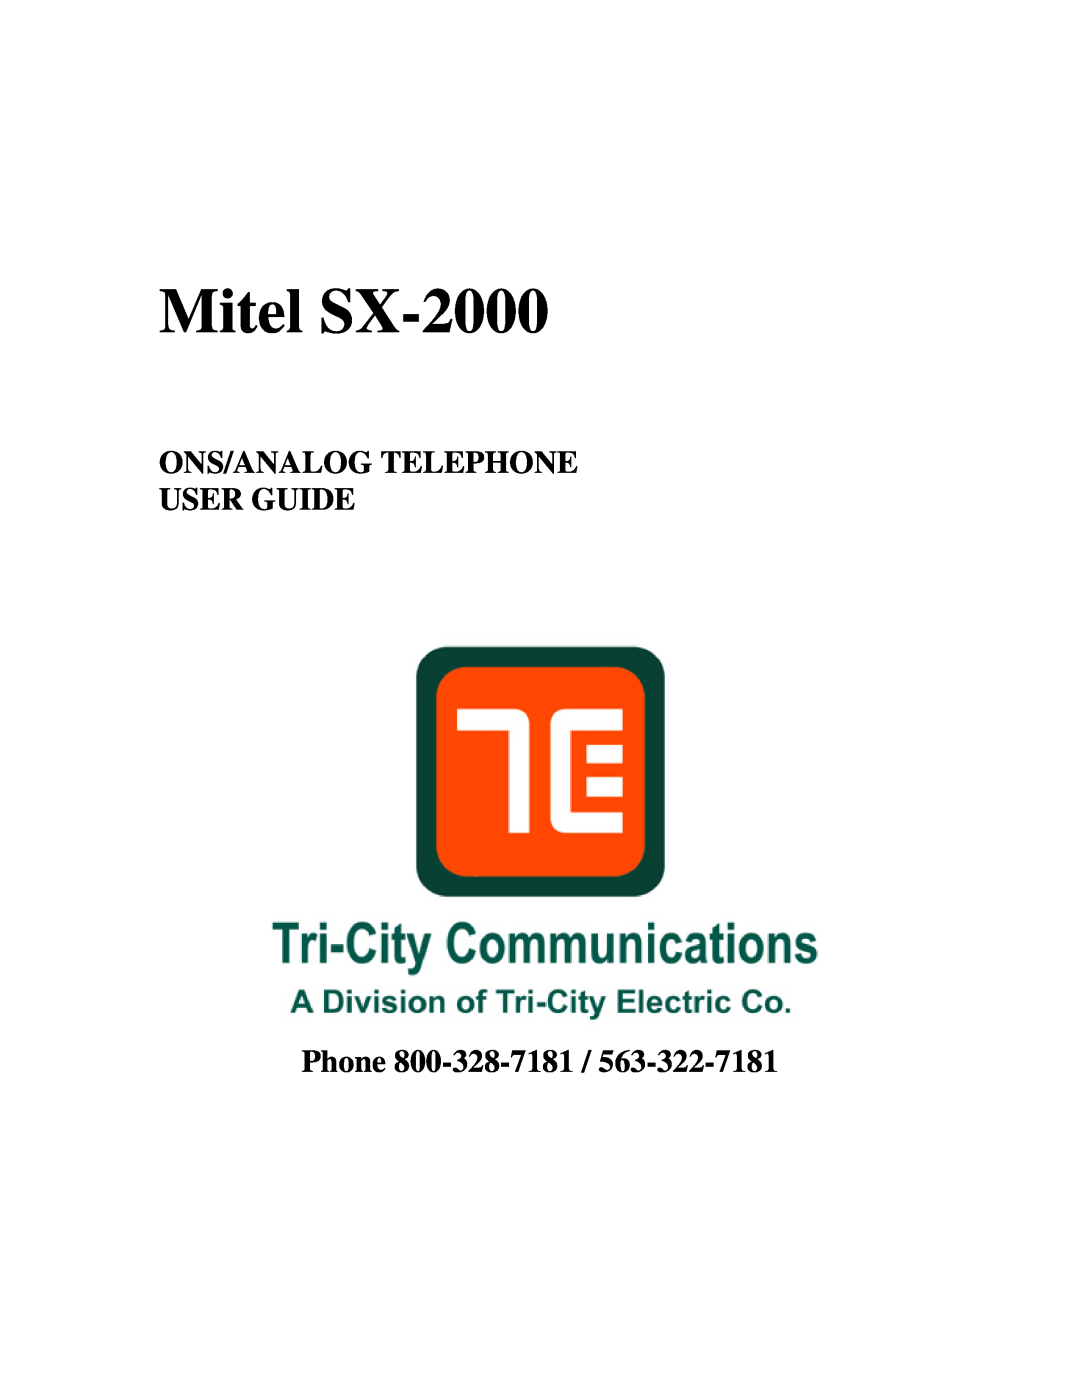 Mitel manual Mitel SX-2000, ONS/ANALOG TELEPHONE USER GUIDE Phone 